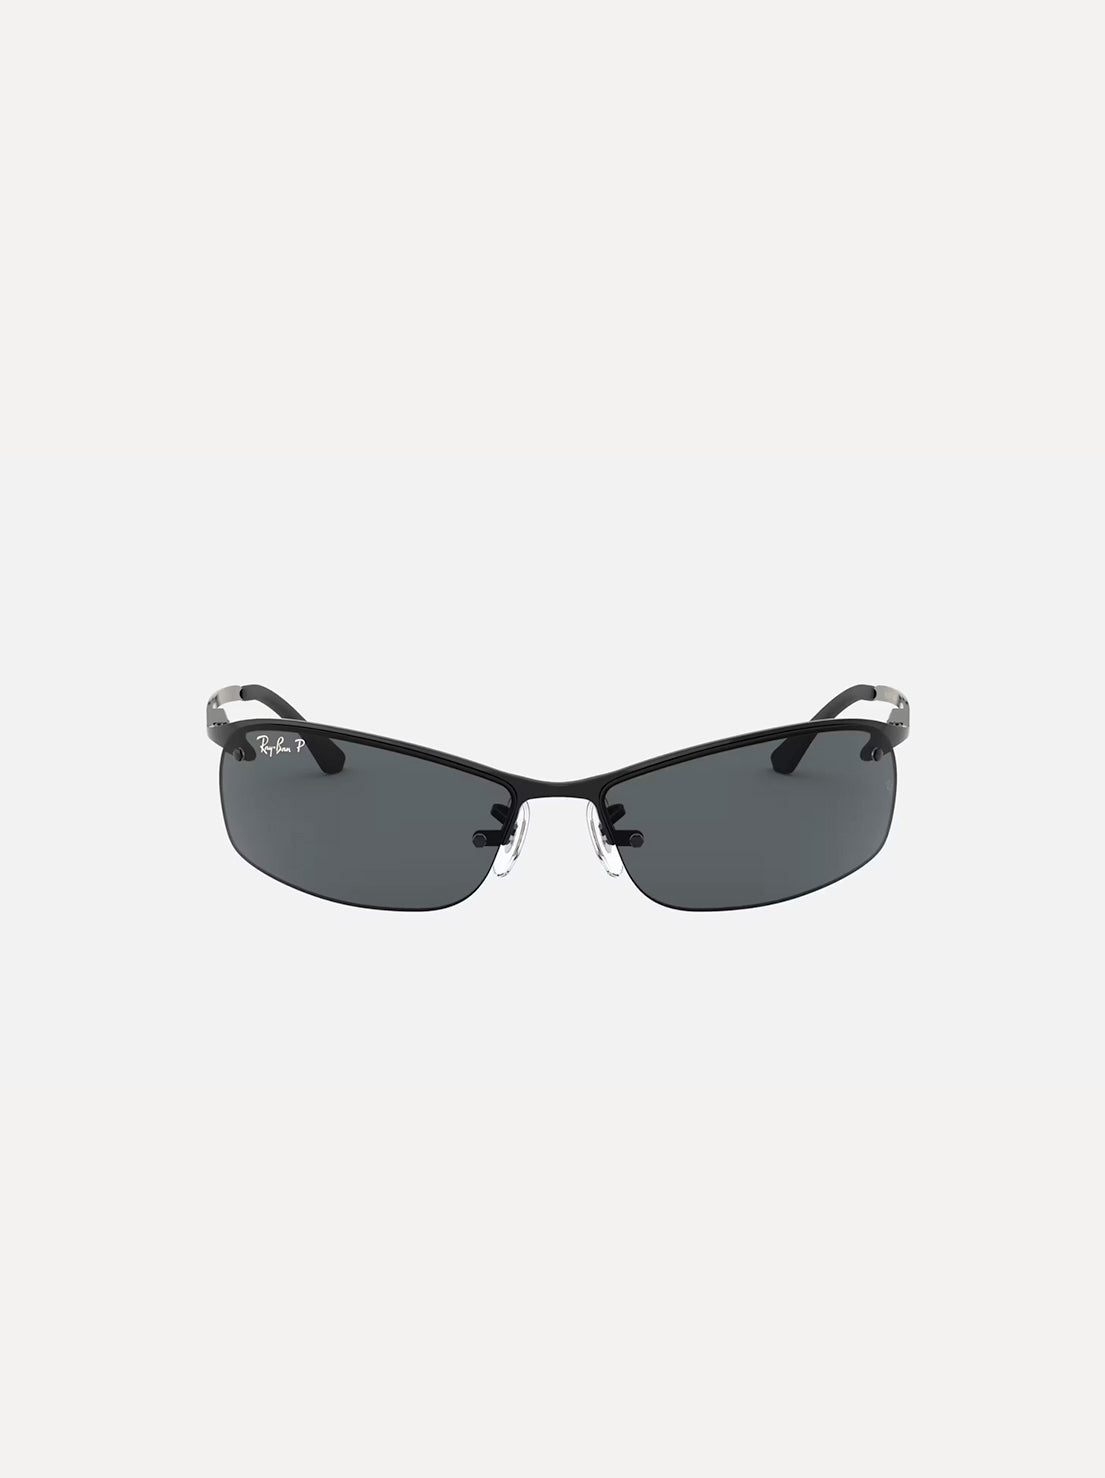 Ray-ban Rb3183 RB3183 Black Polarized (Dark Grey) Sunglasses for Men